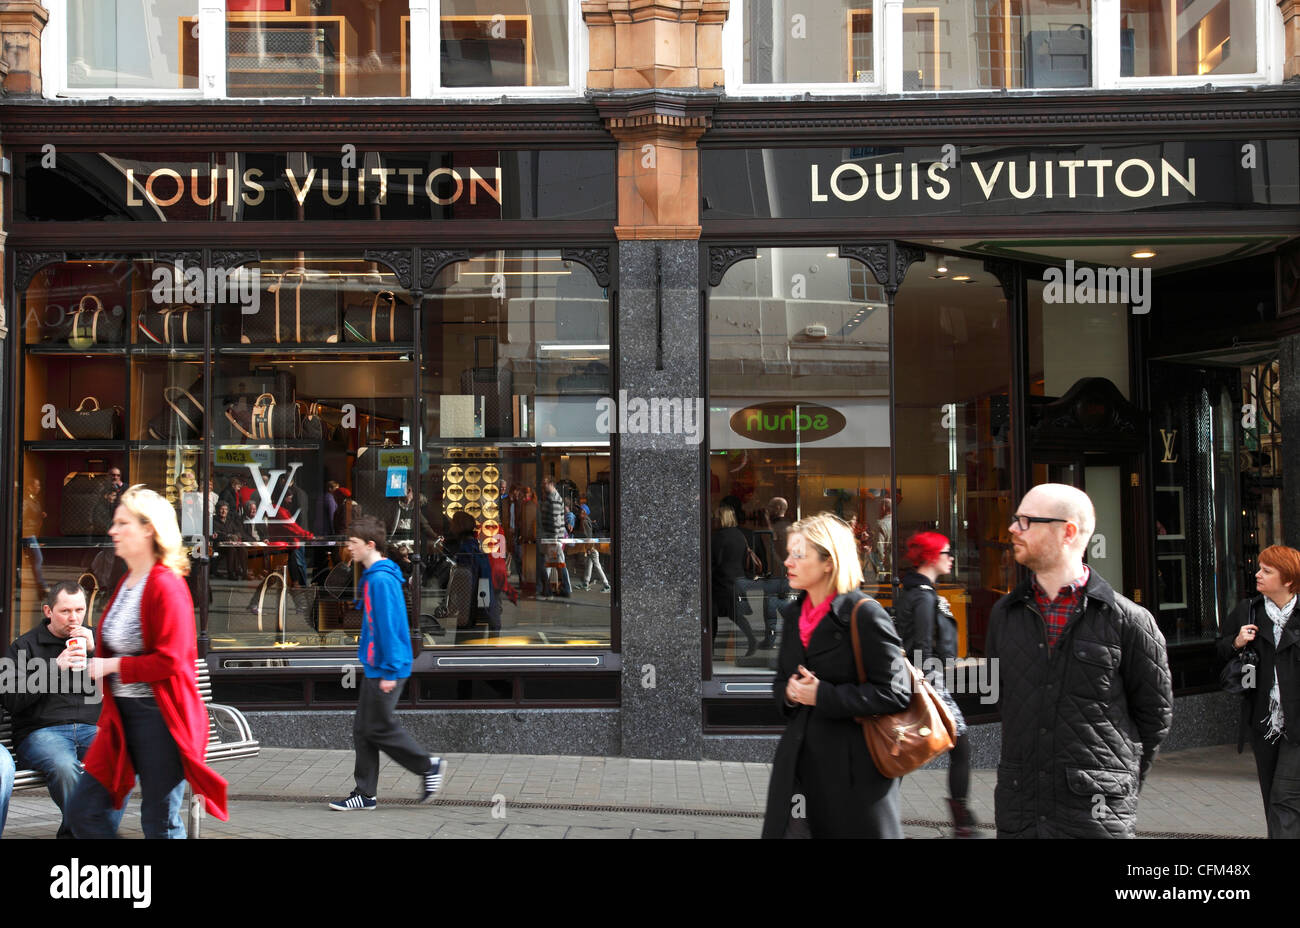 A Louis Vuitton store, Victoria Quarter, Leeds, England, U.K. Stock Photo